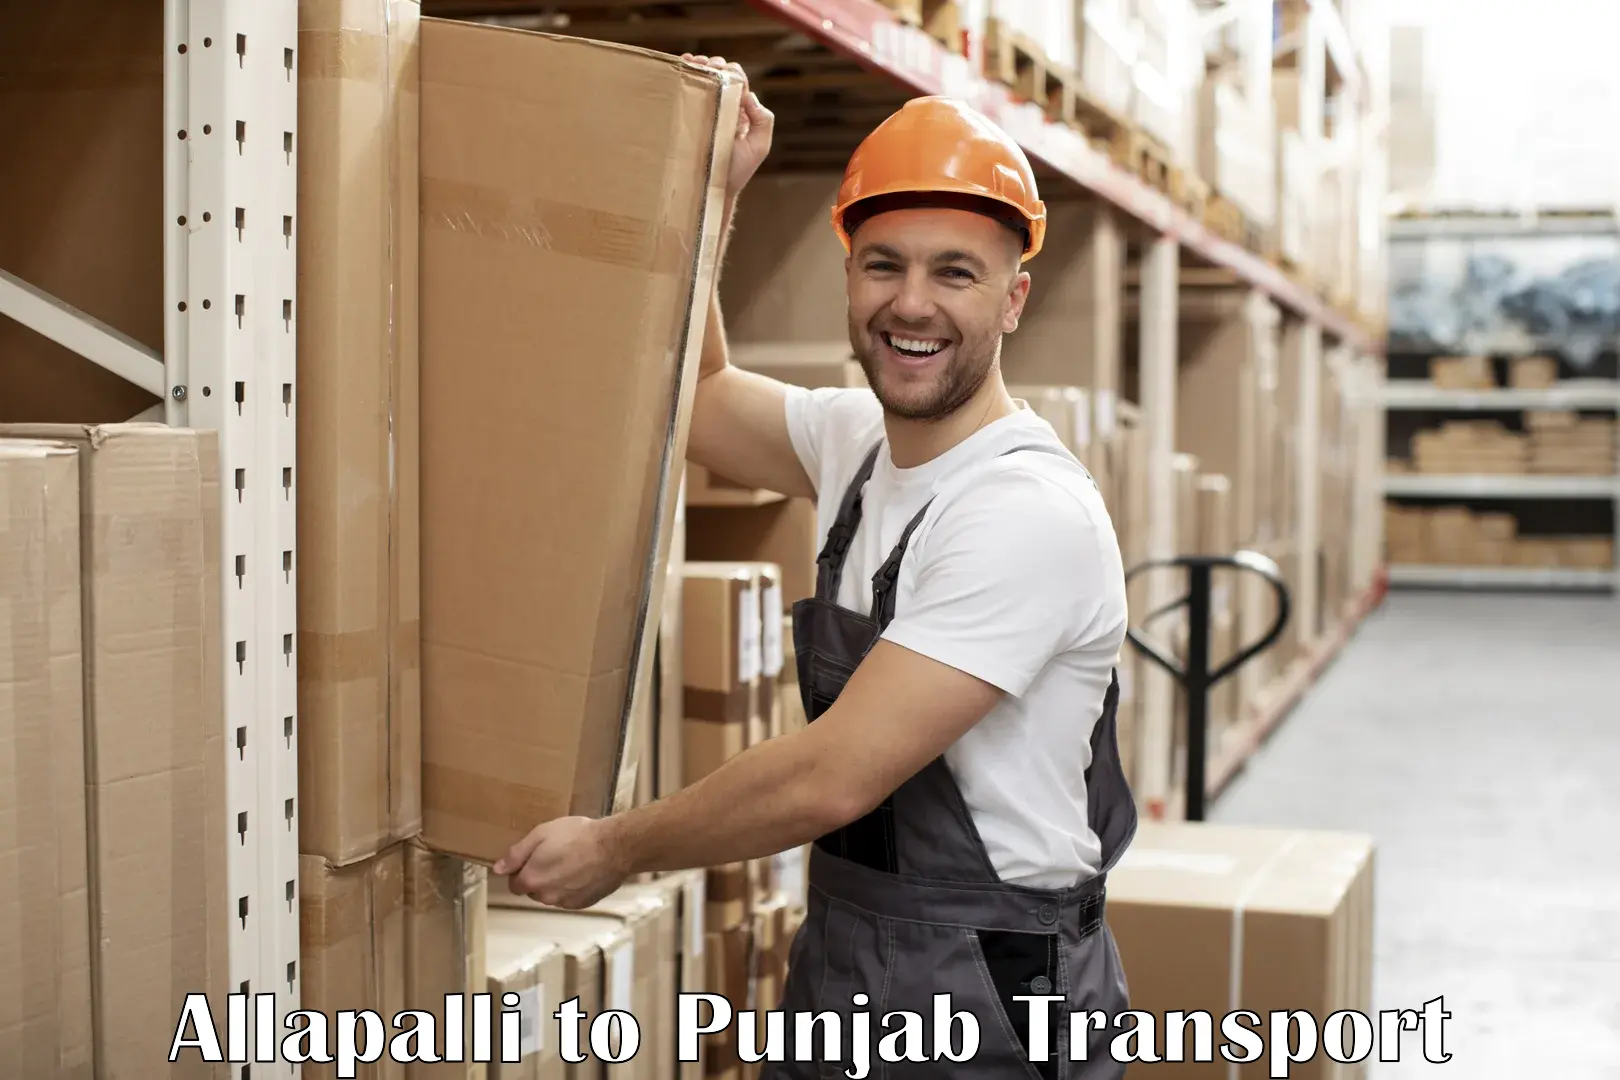 Online transport service Allapalli to Punjab